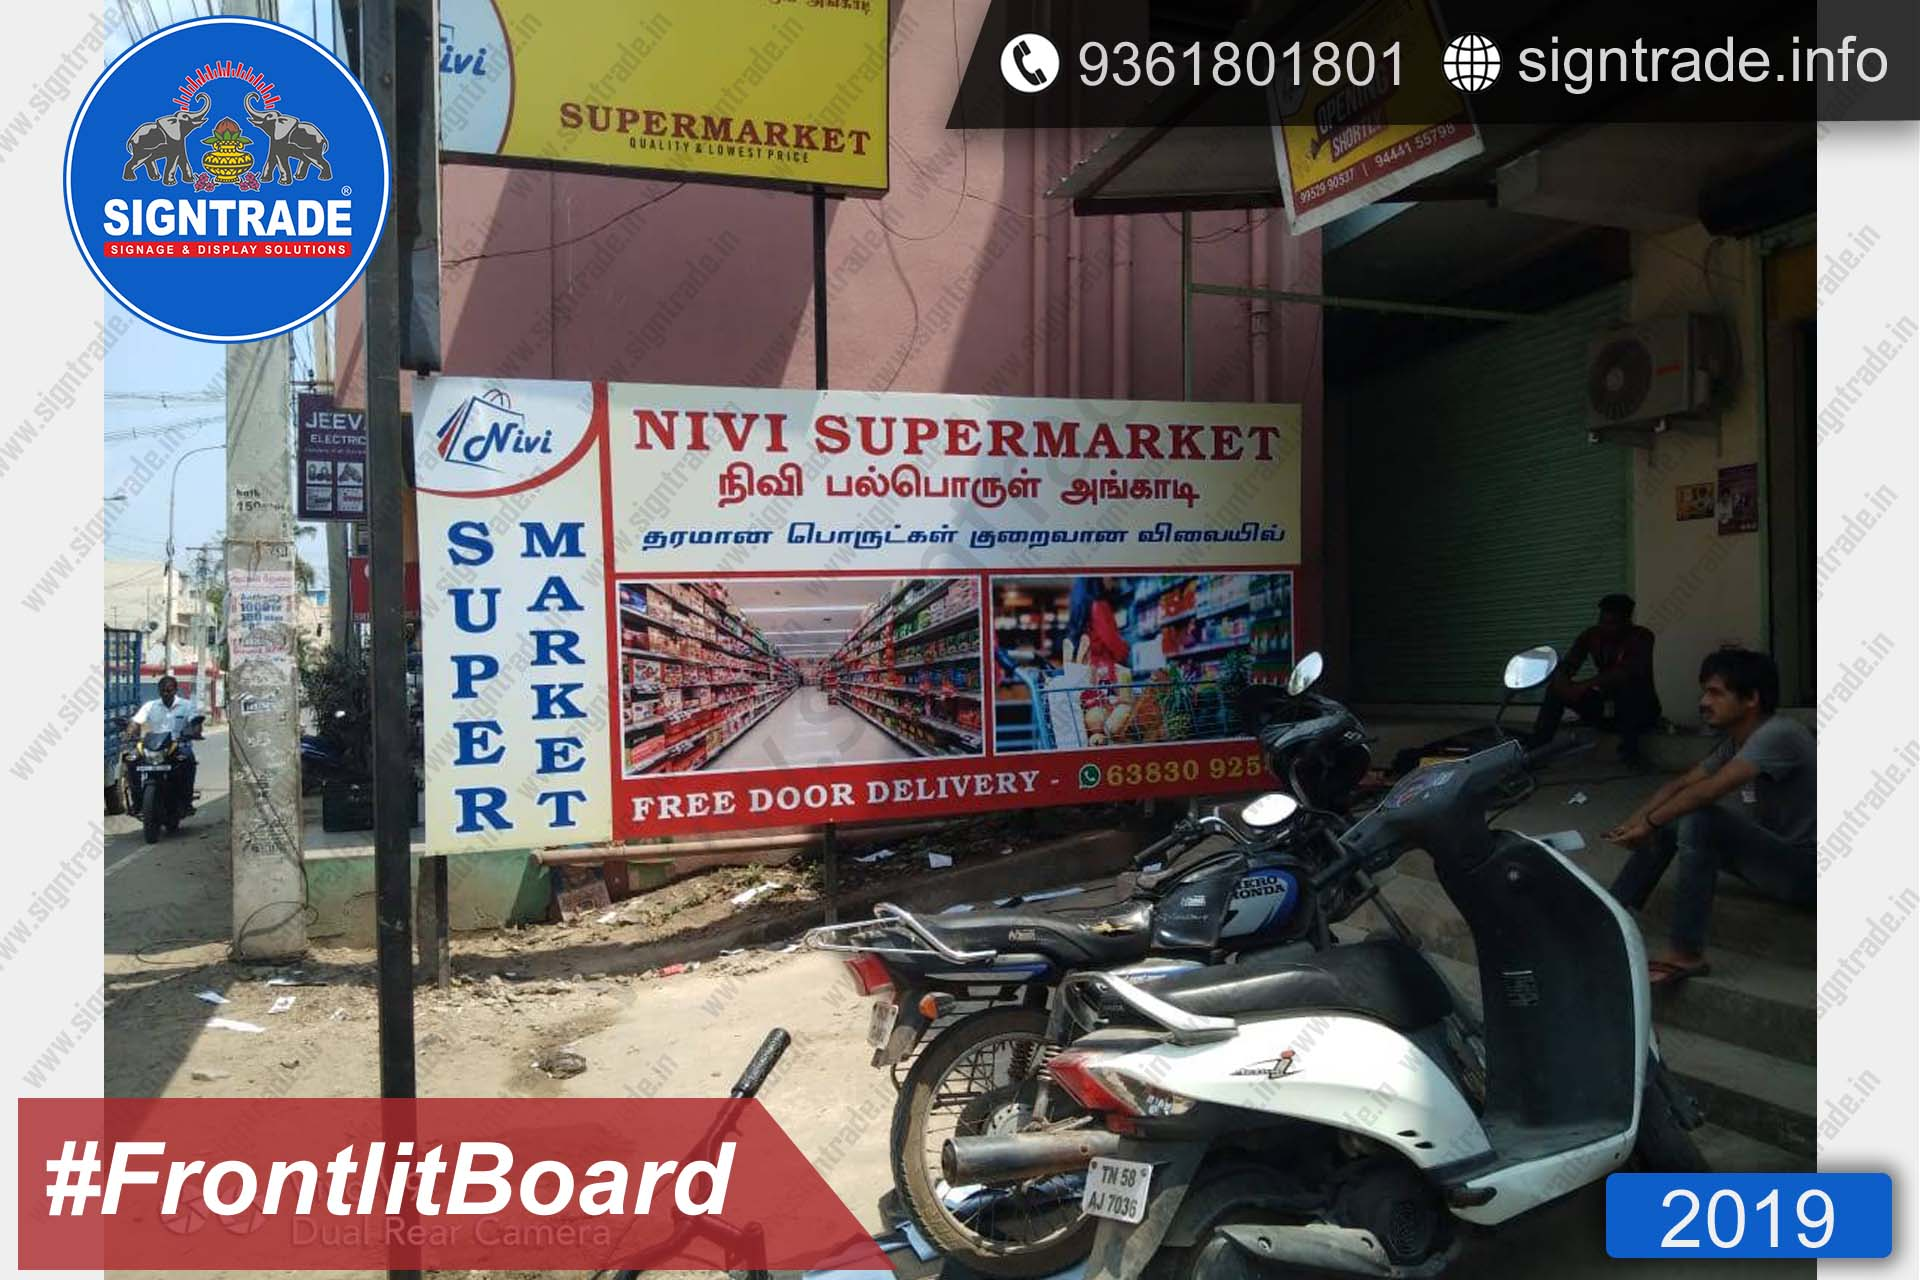 Nivi Super Market Frontlit Board